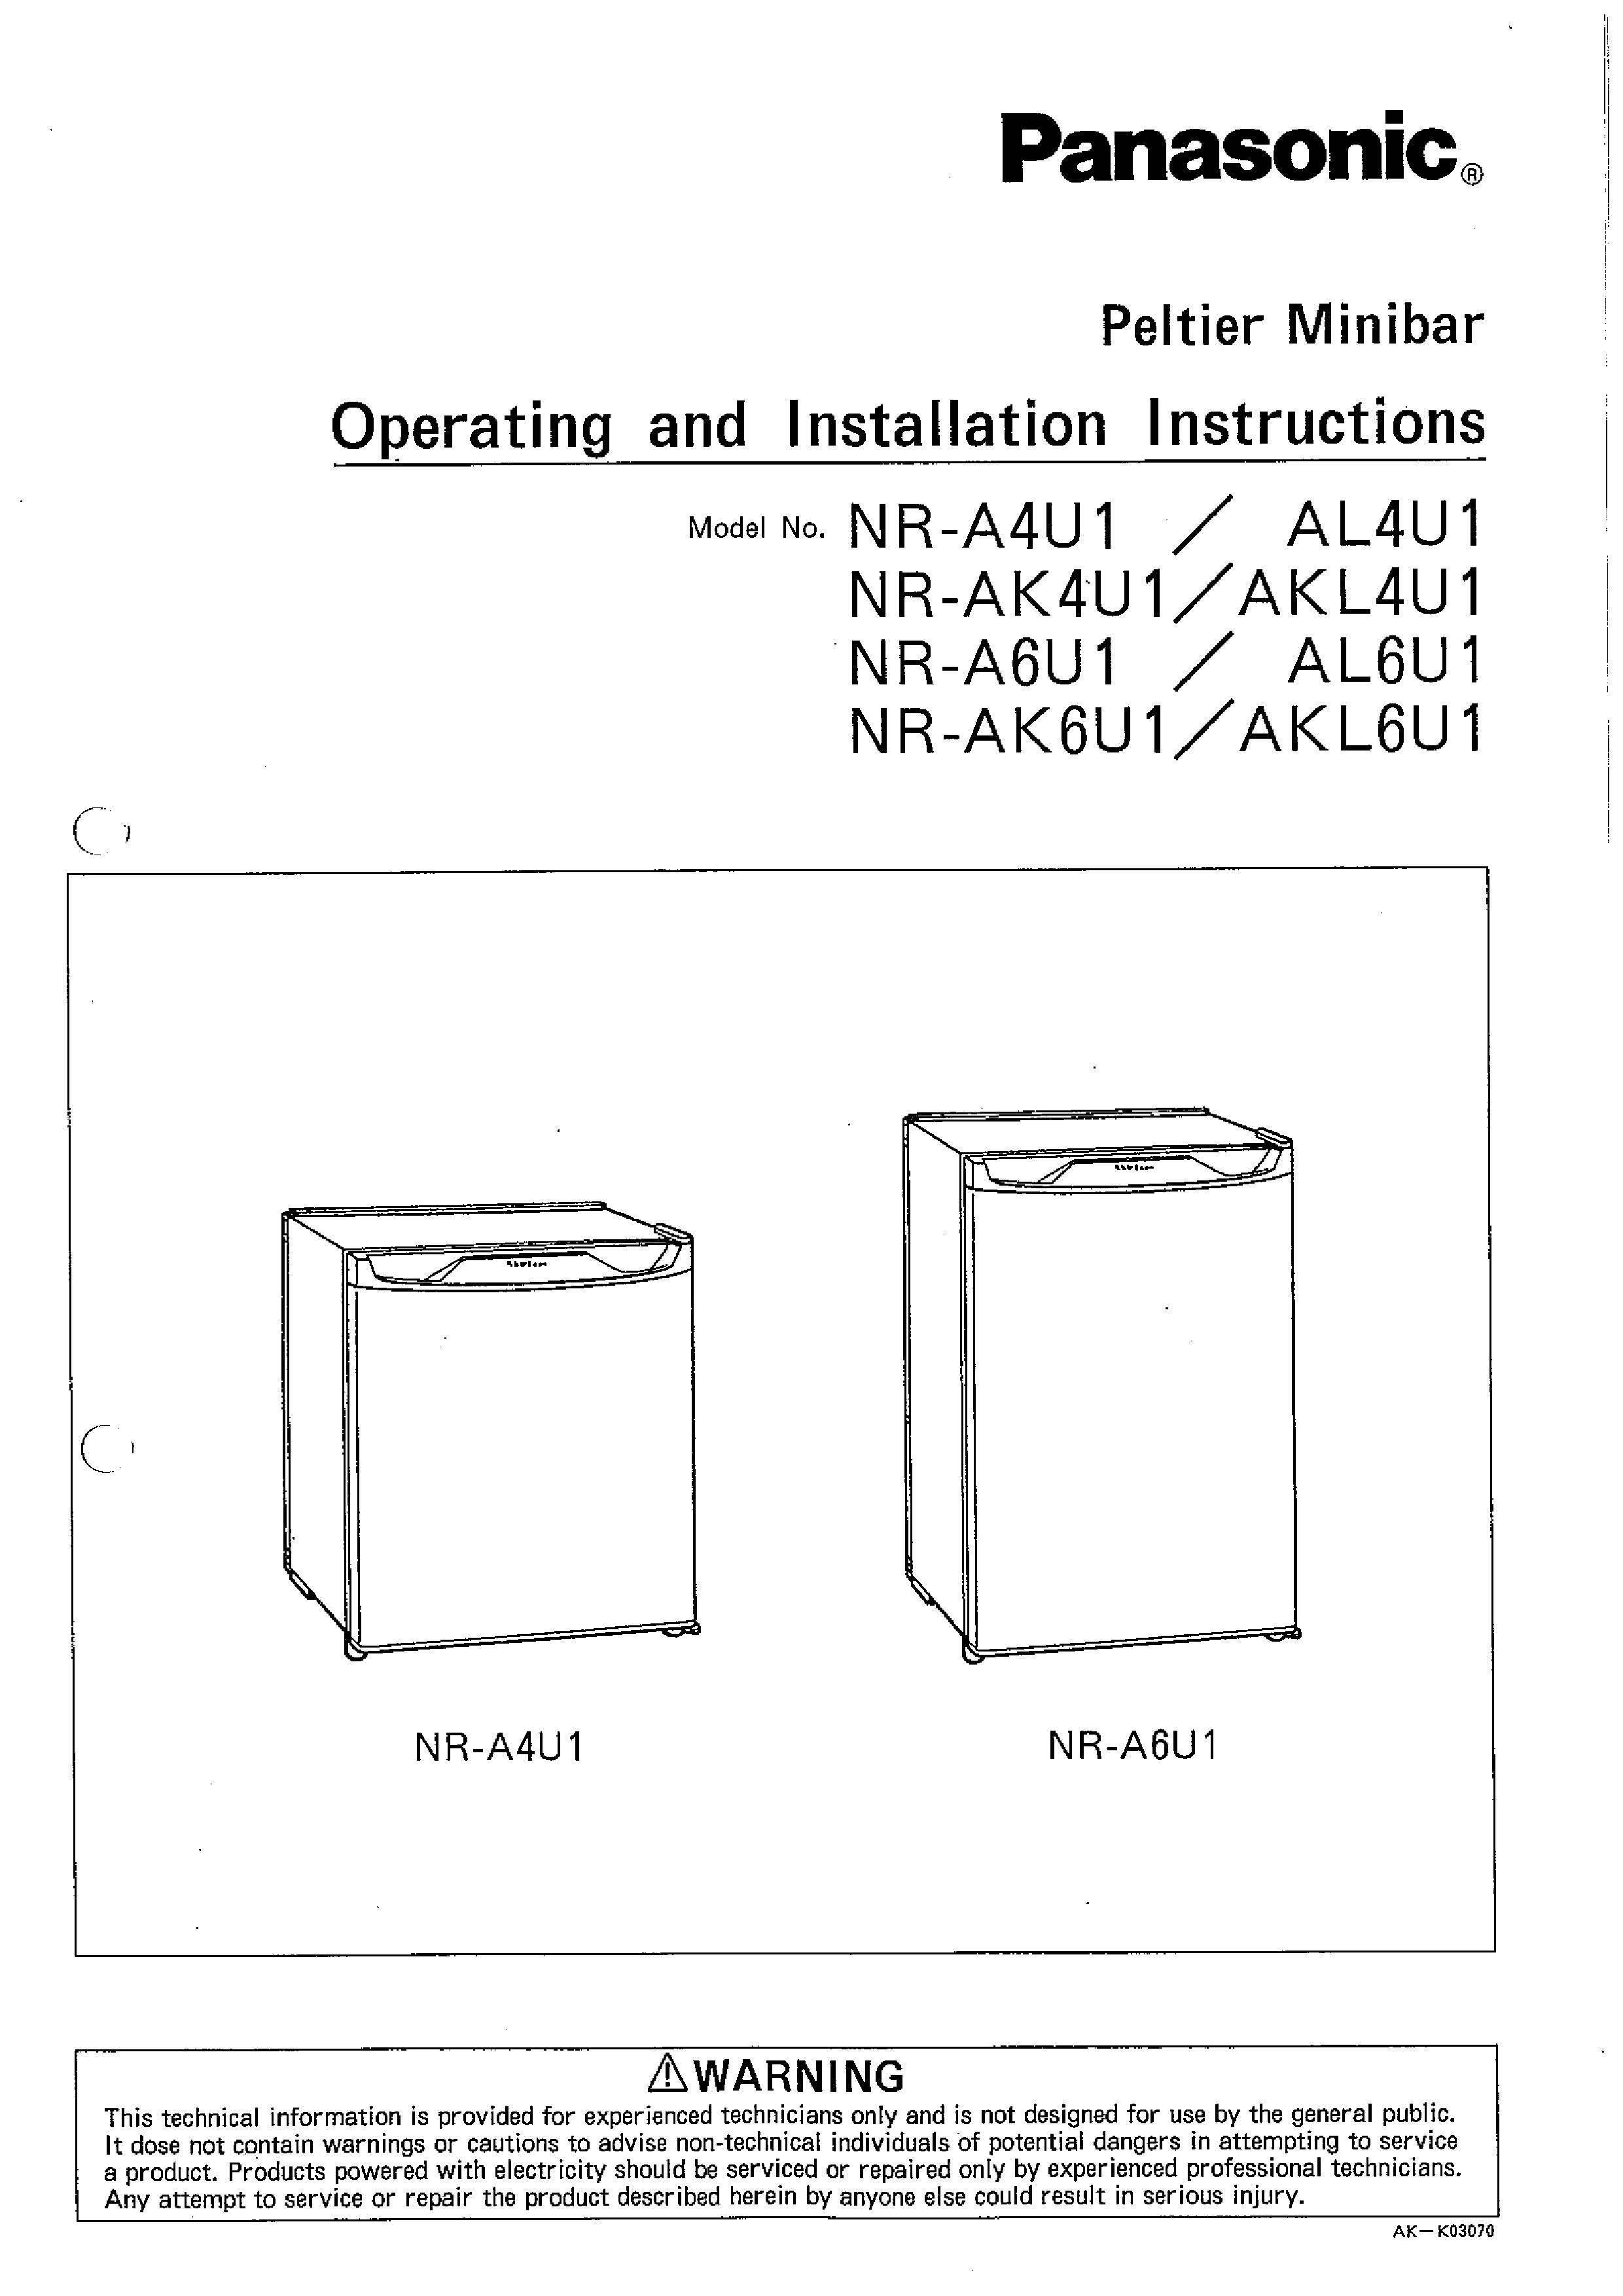 Panasonic NR-A4U1 Refrigerator User Manual